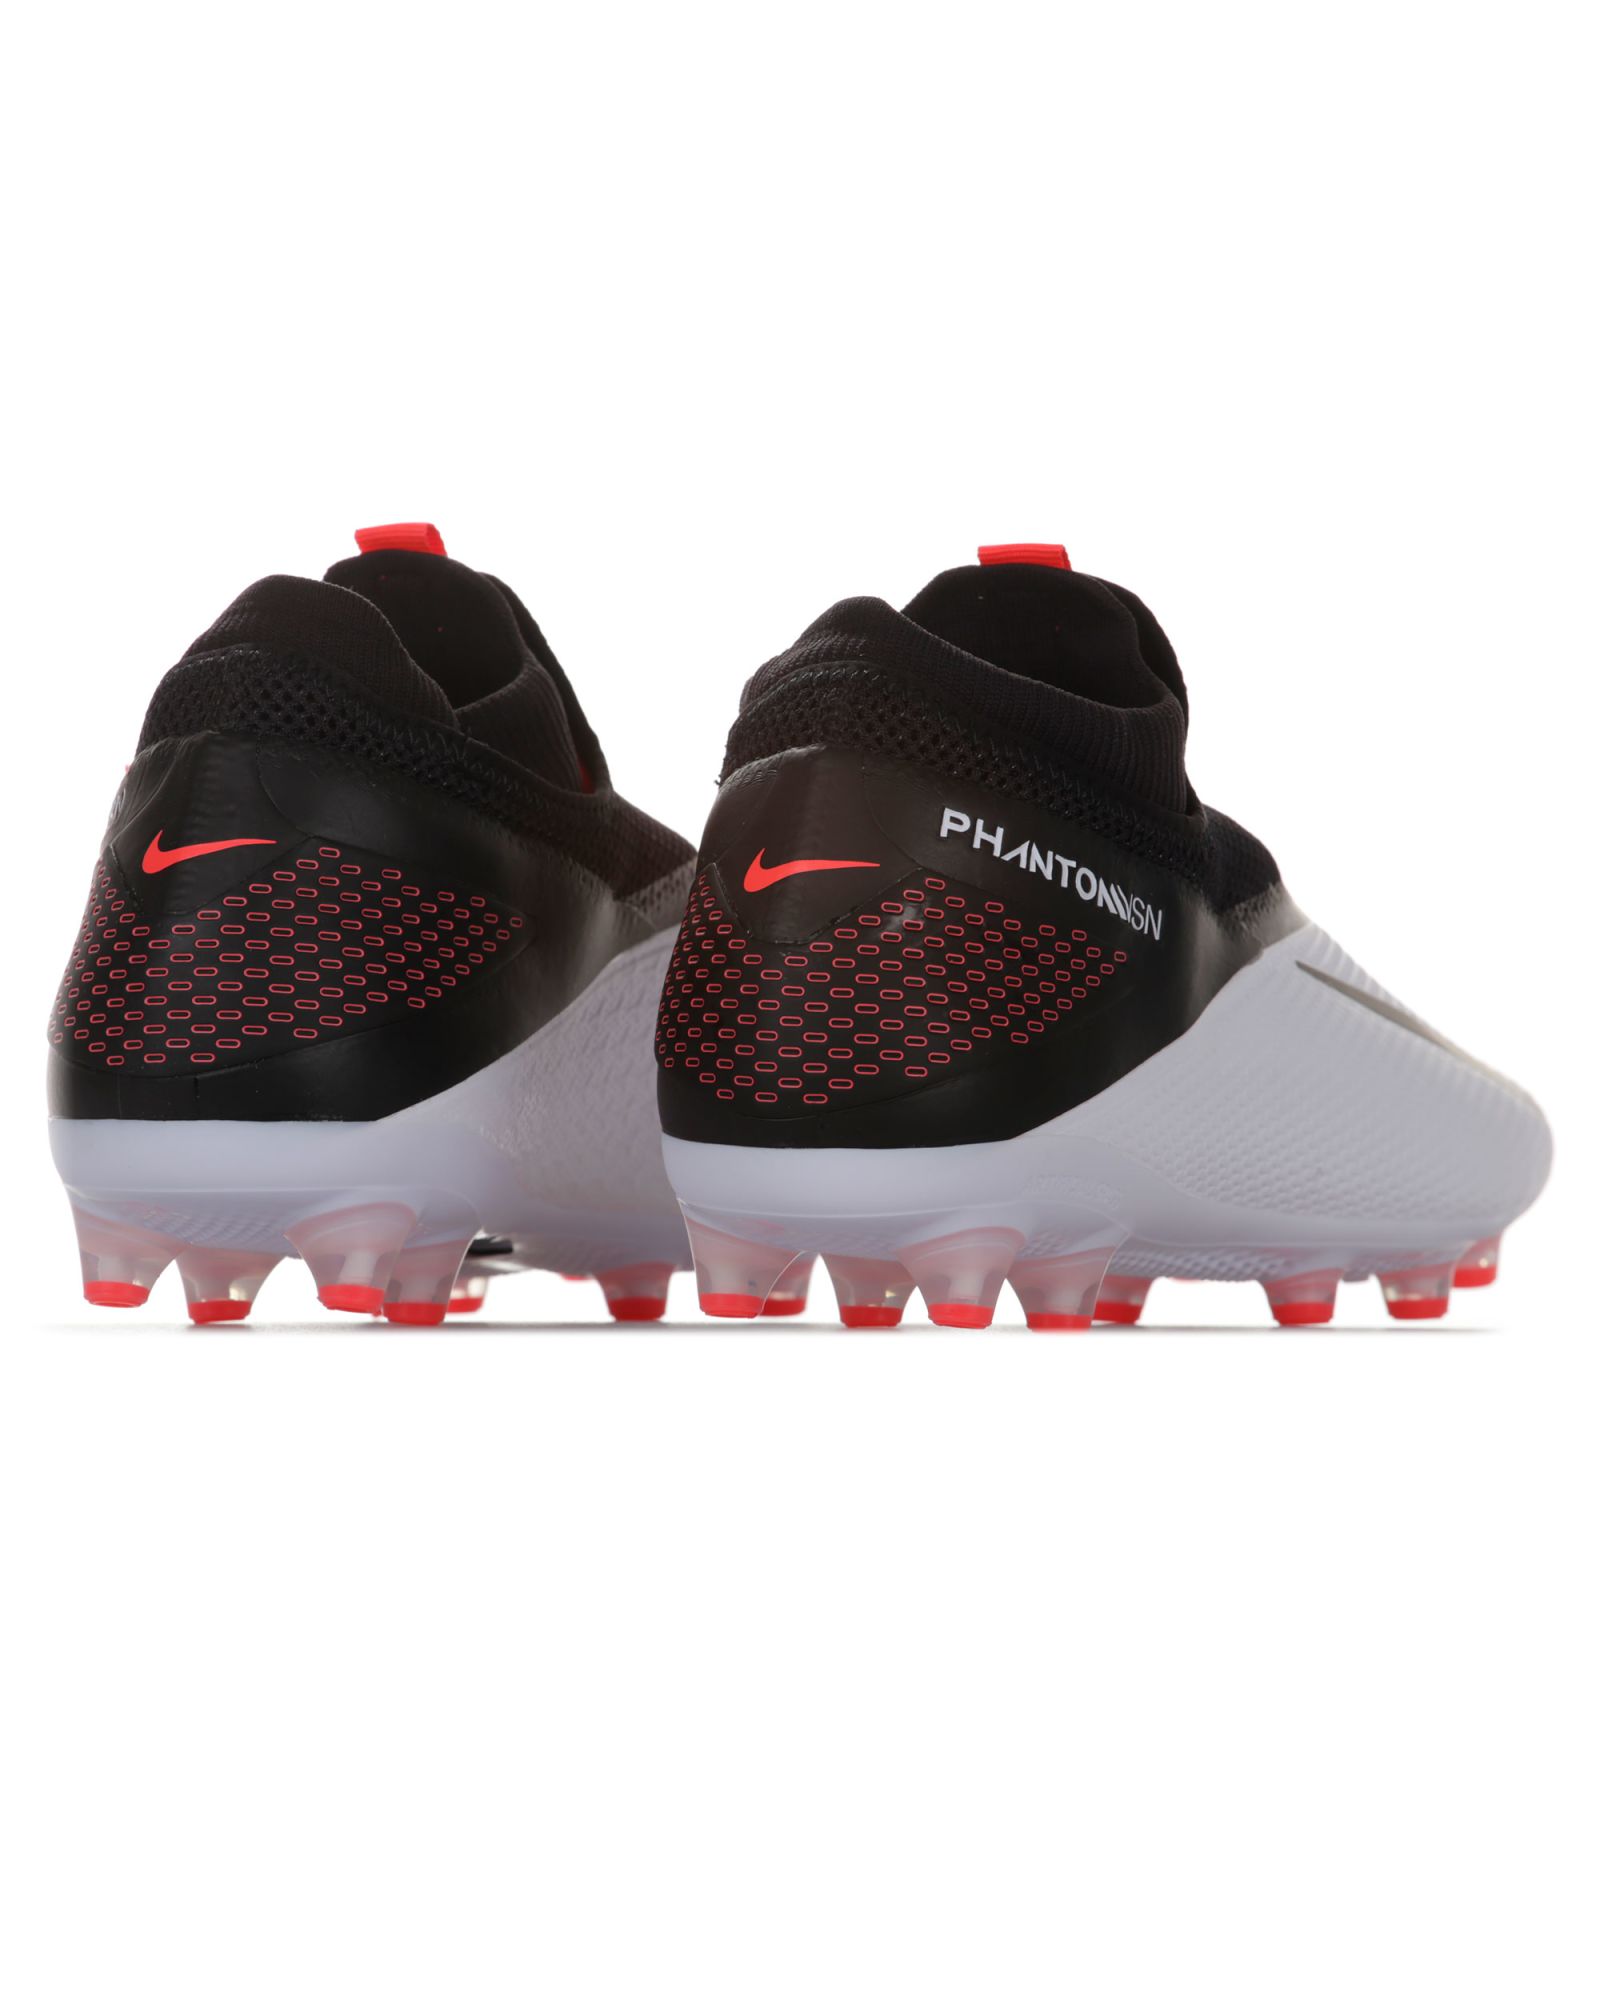 Botas de fútbol Nike Phantom Vision 2 Pro Dynamic Fit AG-Pro Blanco Negro - Fútbol Factory